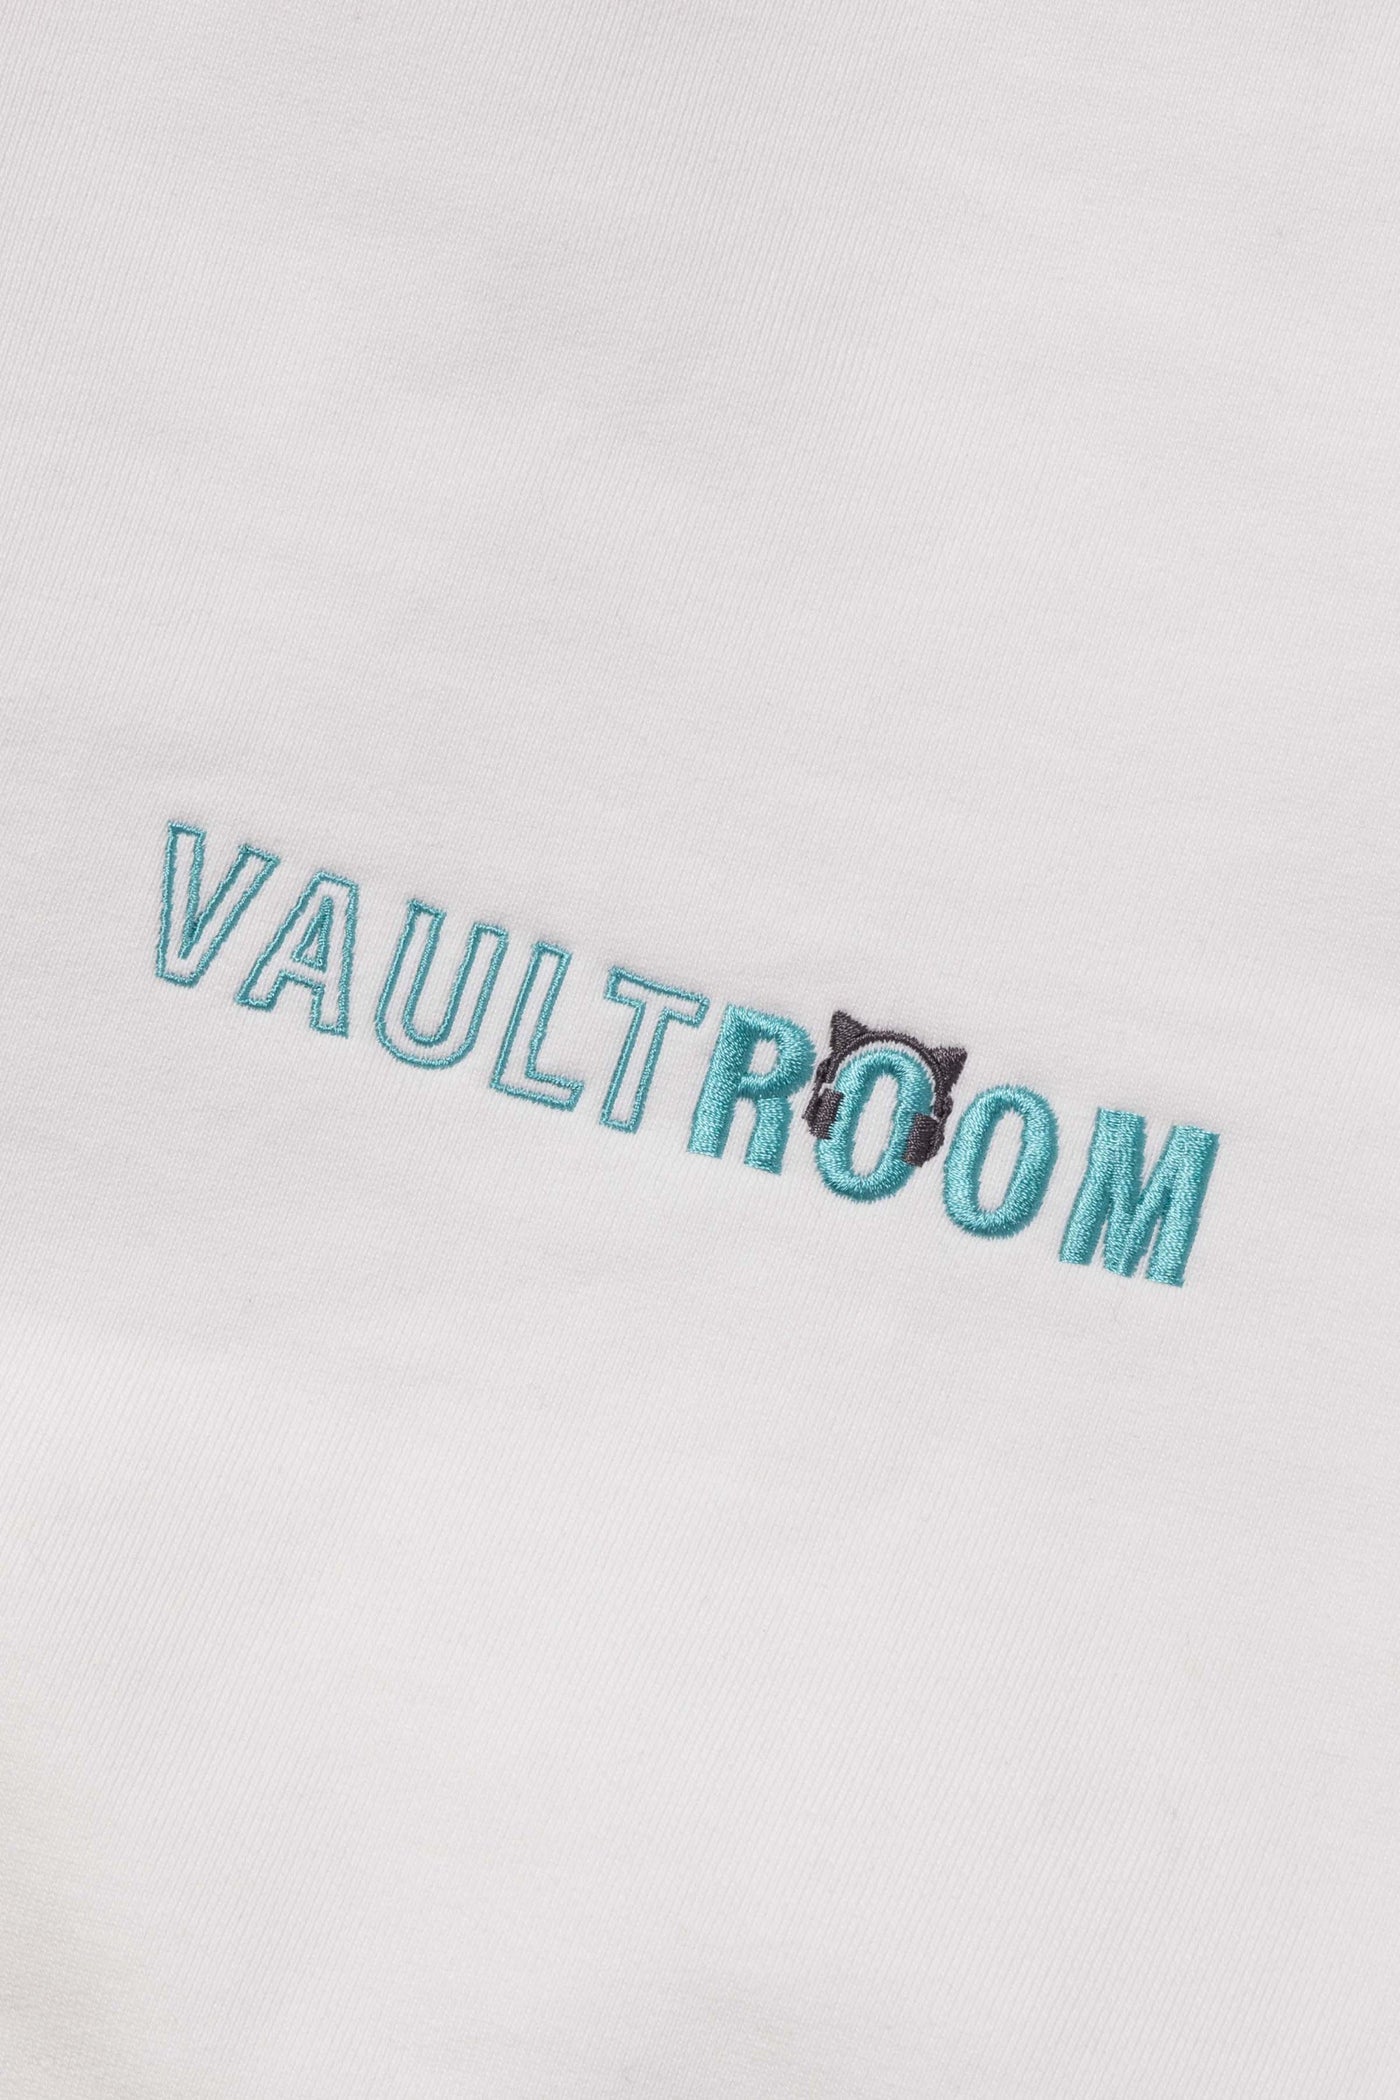 NEKOMUGI TORORO HOODIE / vaultroom Lサイズ黒